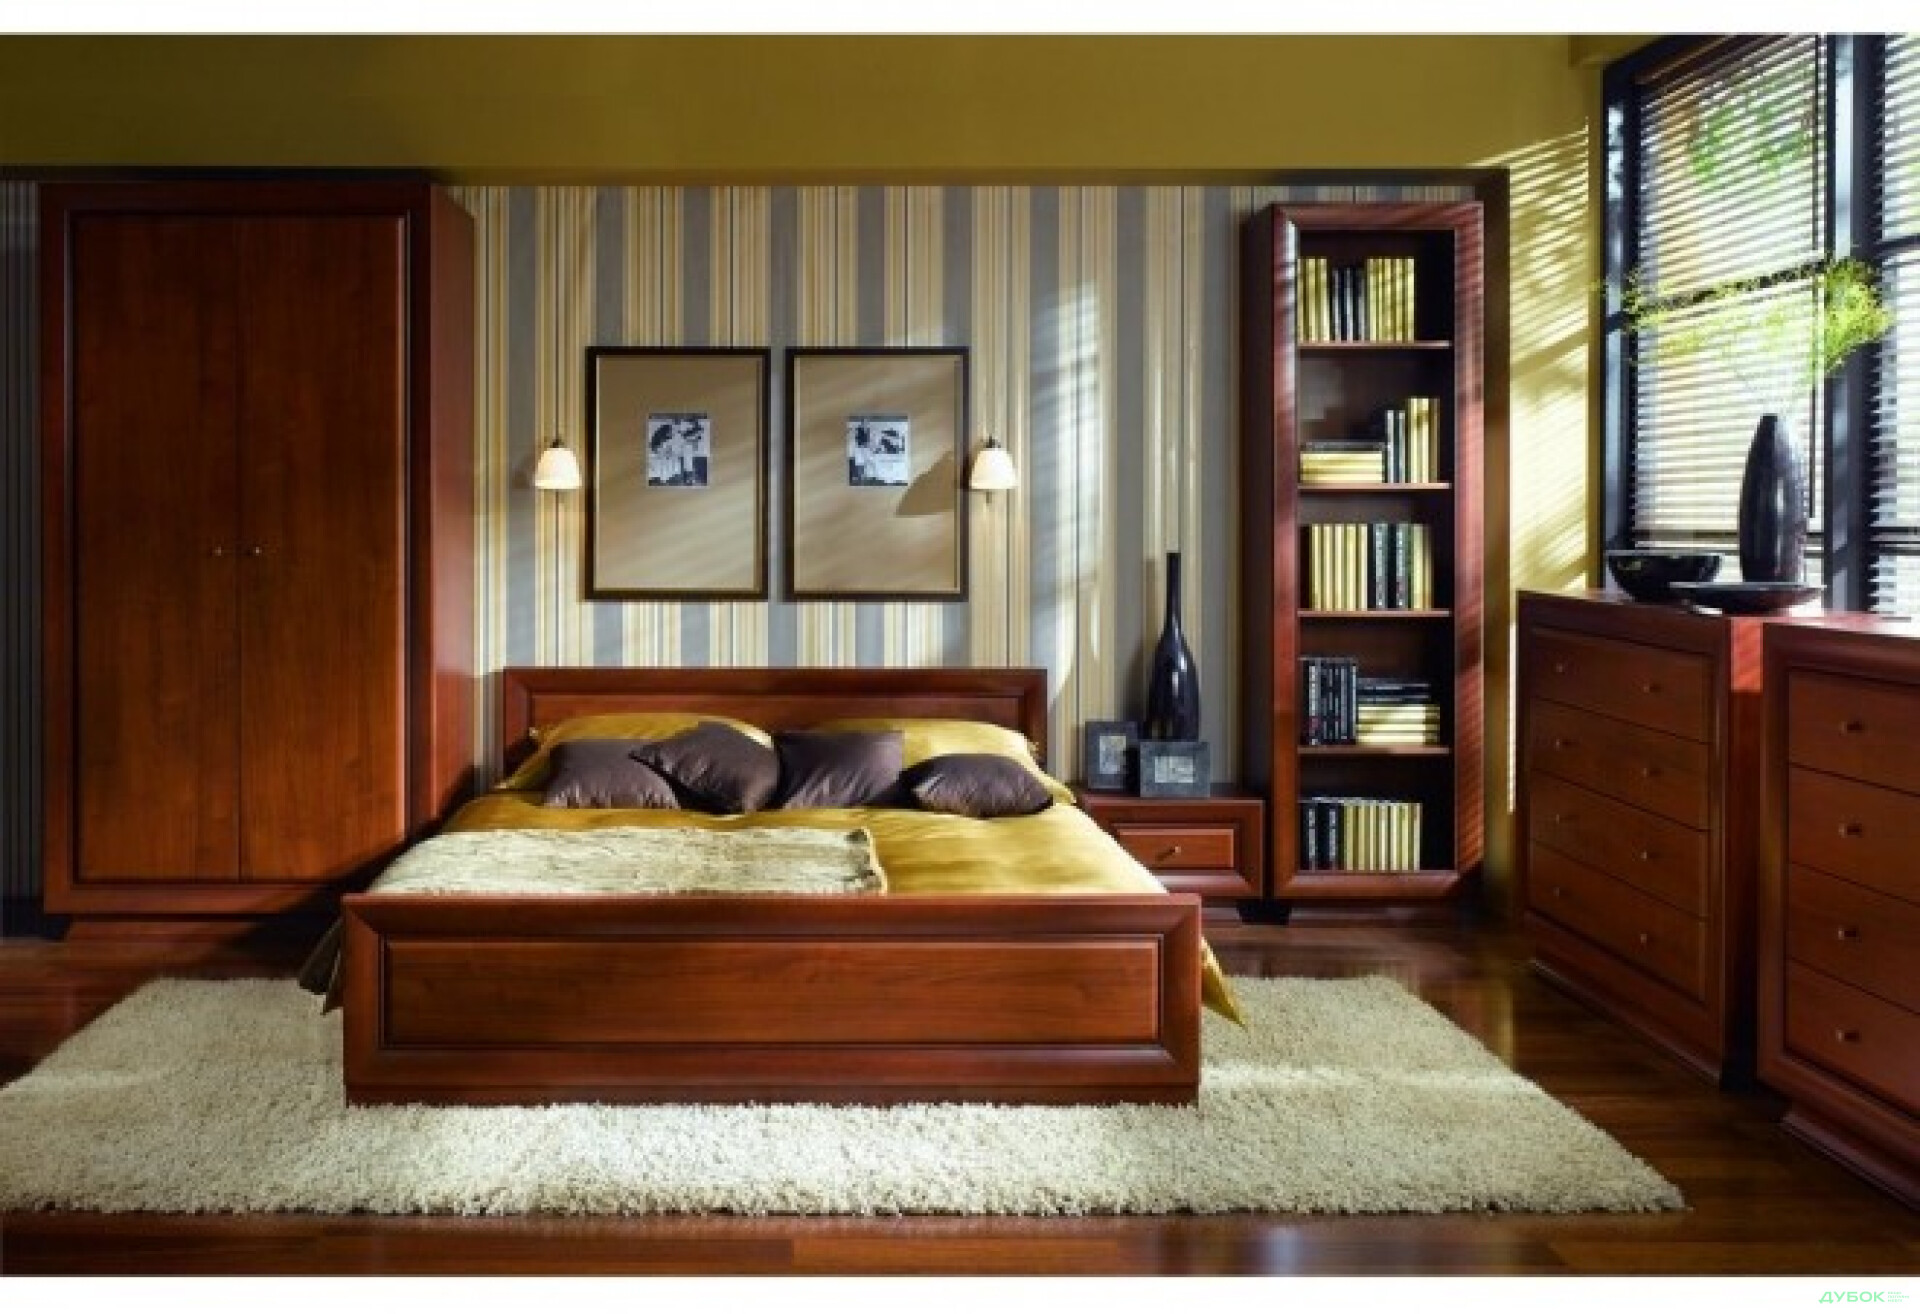 Фото 1 - Спальня Ларго Классик / Largo Classic Спальня 2Д ВМК